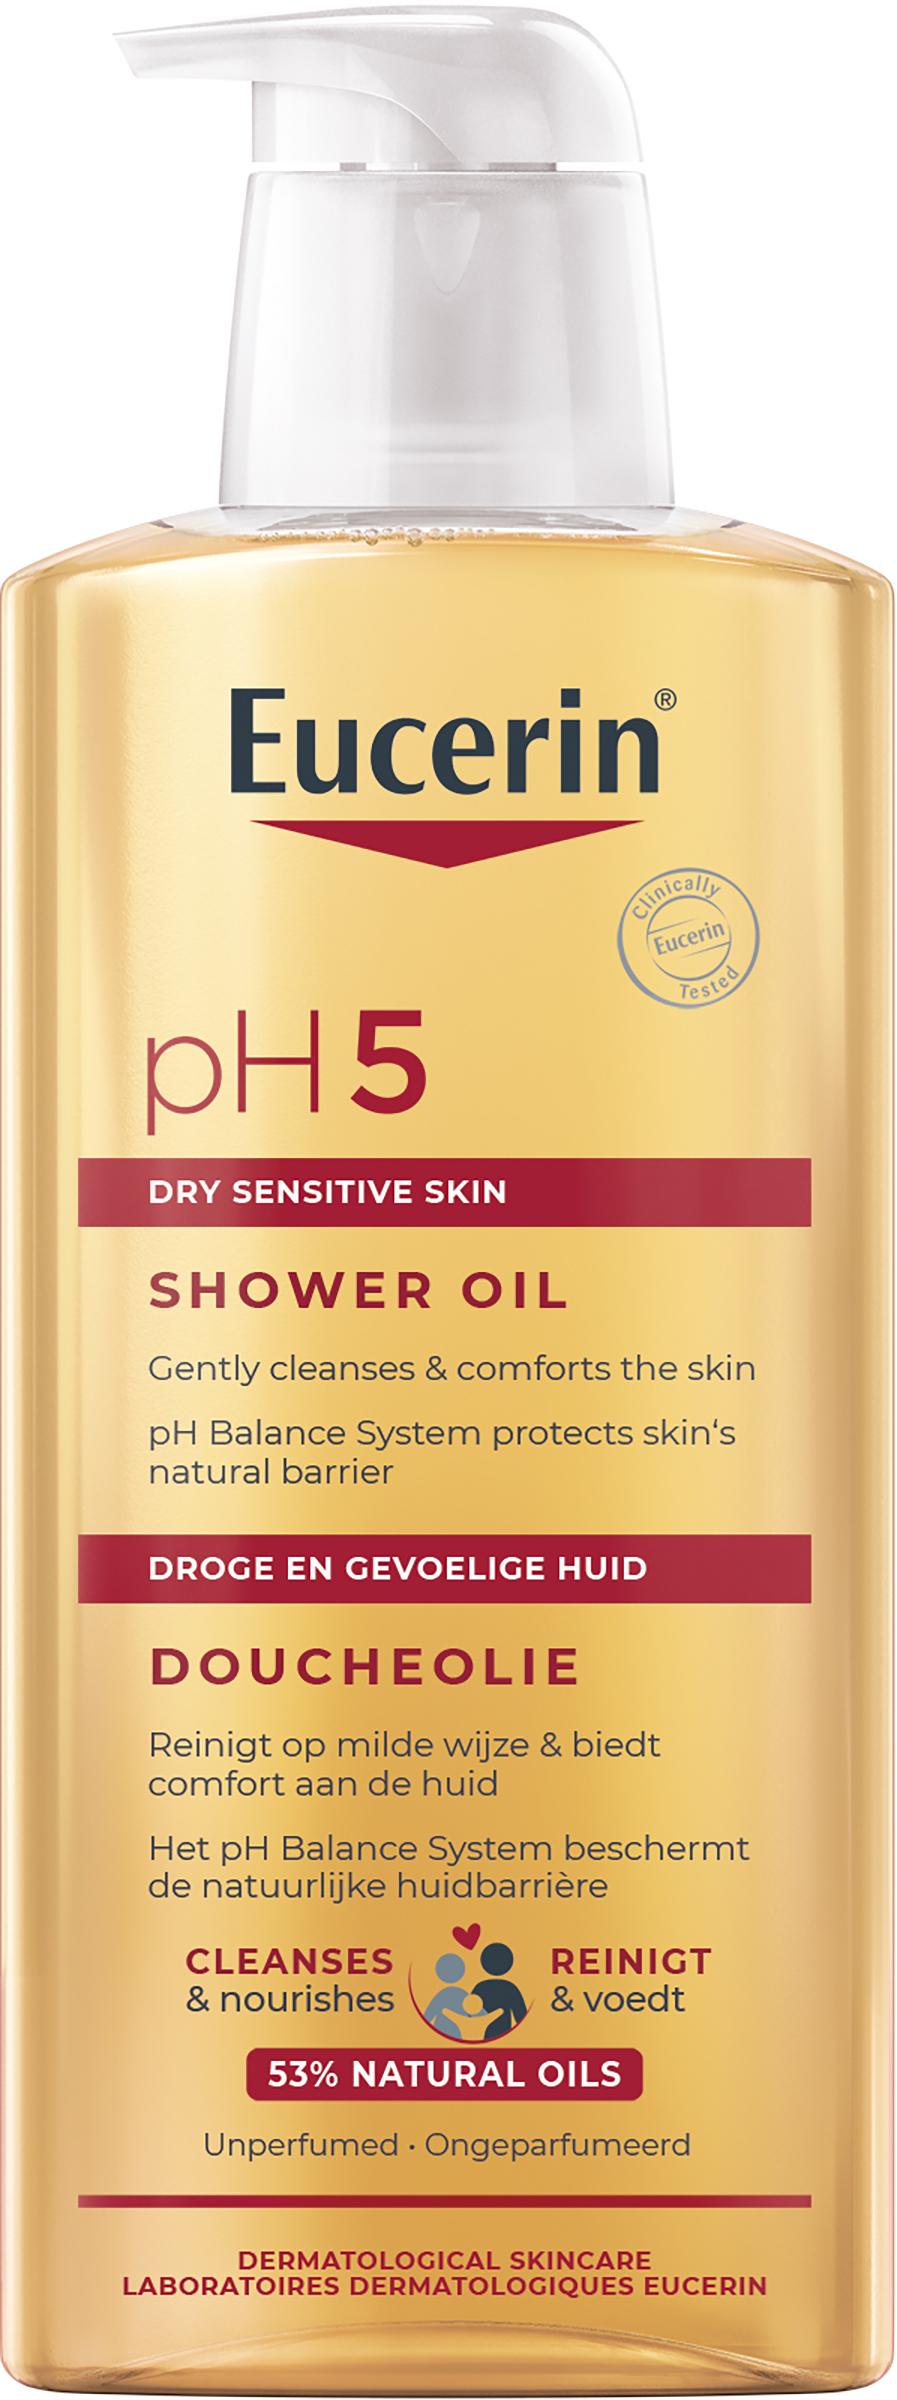 Eucerin pH5 Shower Oil Oparfymerad 400 ml